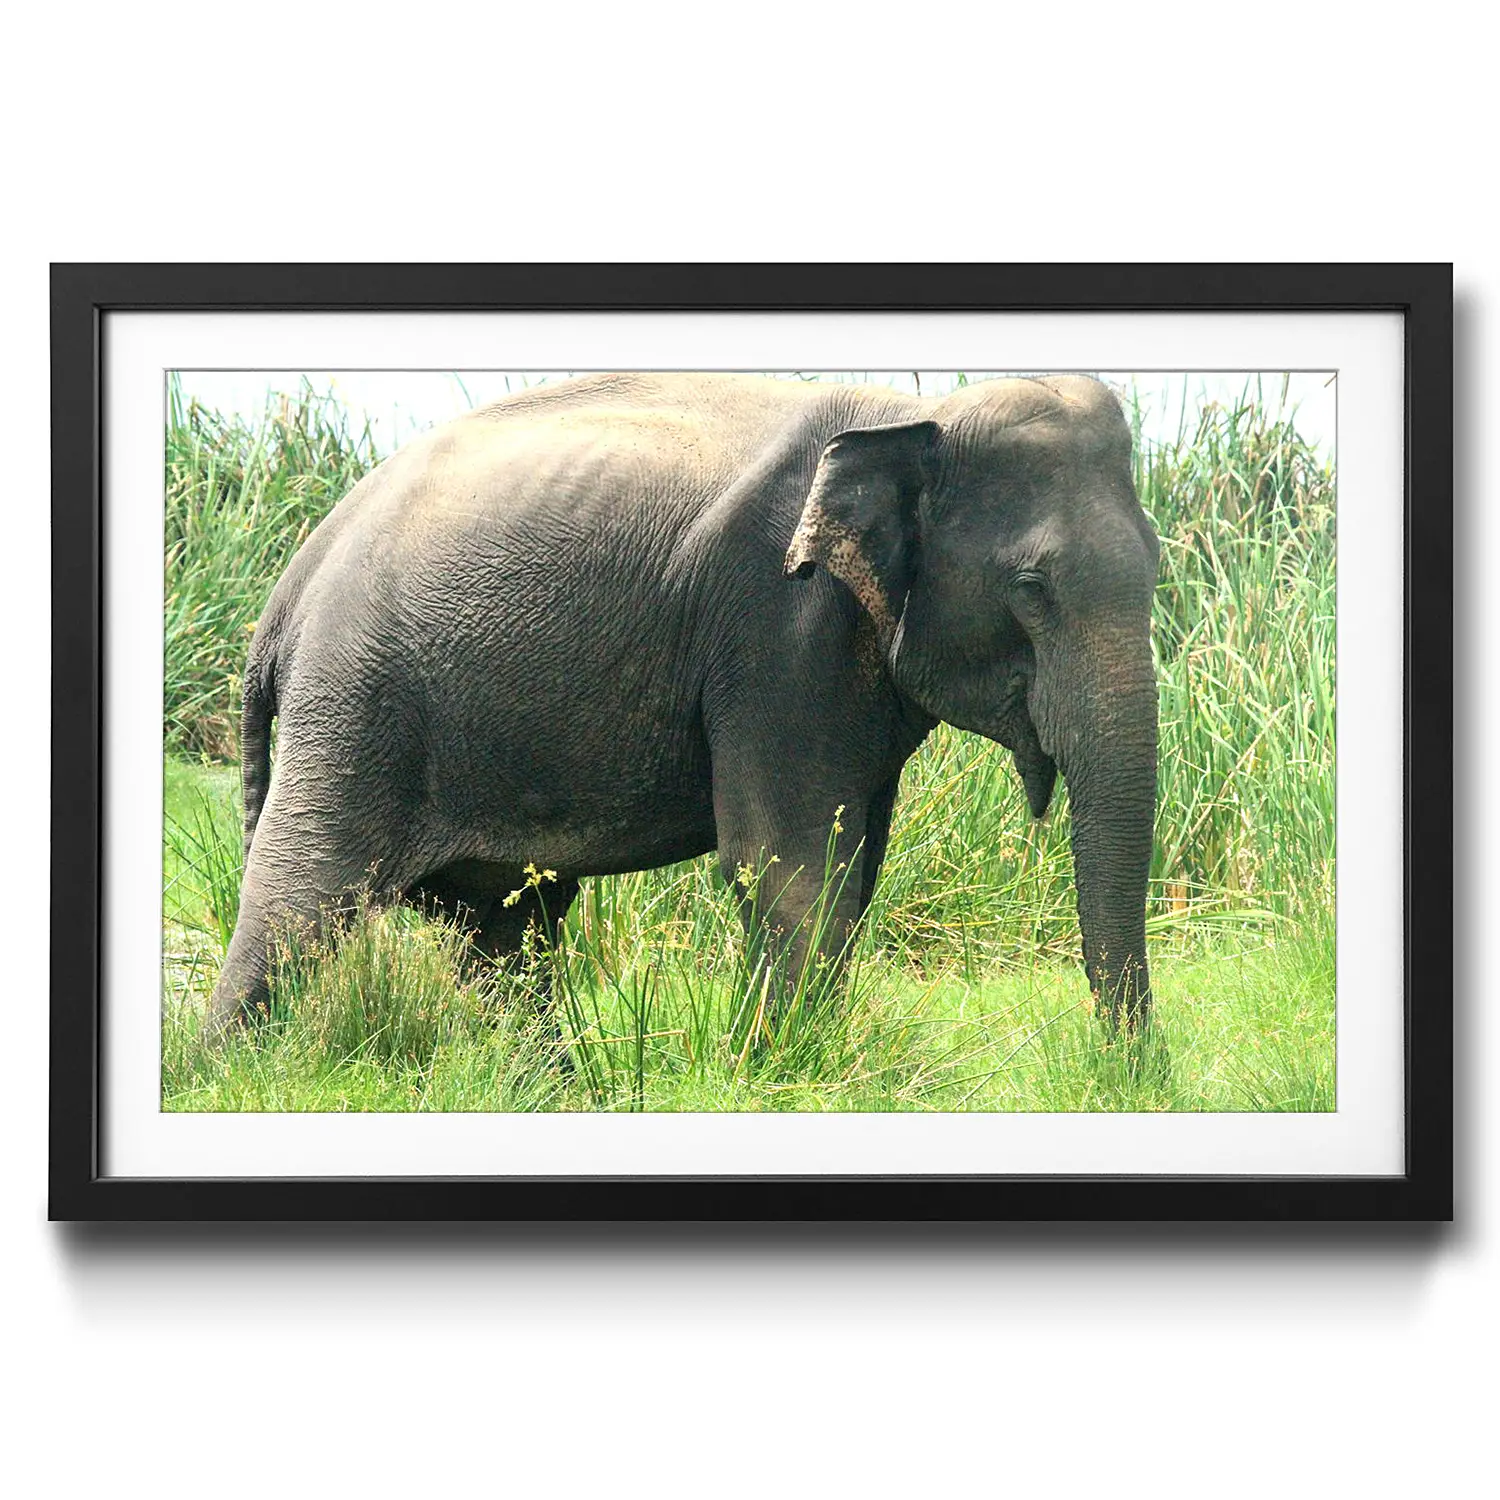 Gerahmtes Bild Old Elephant